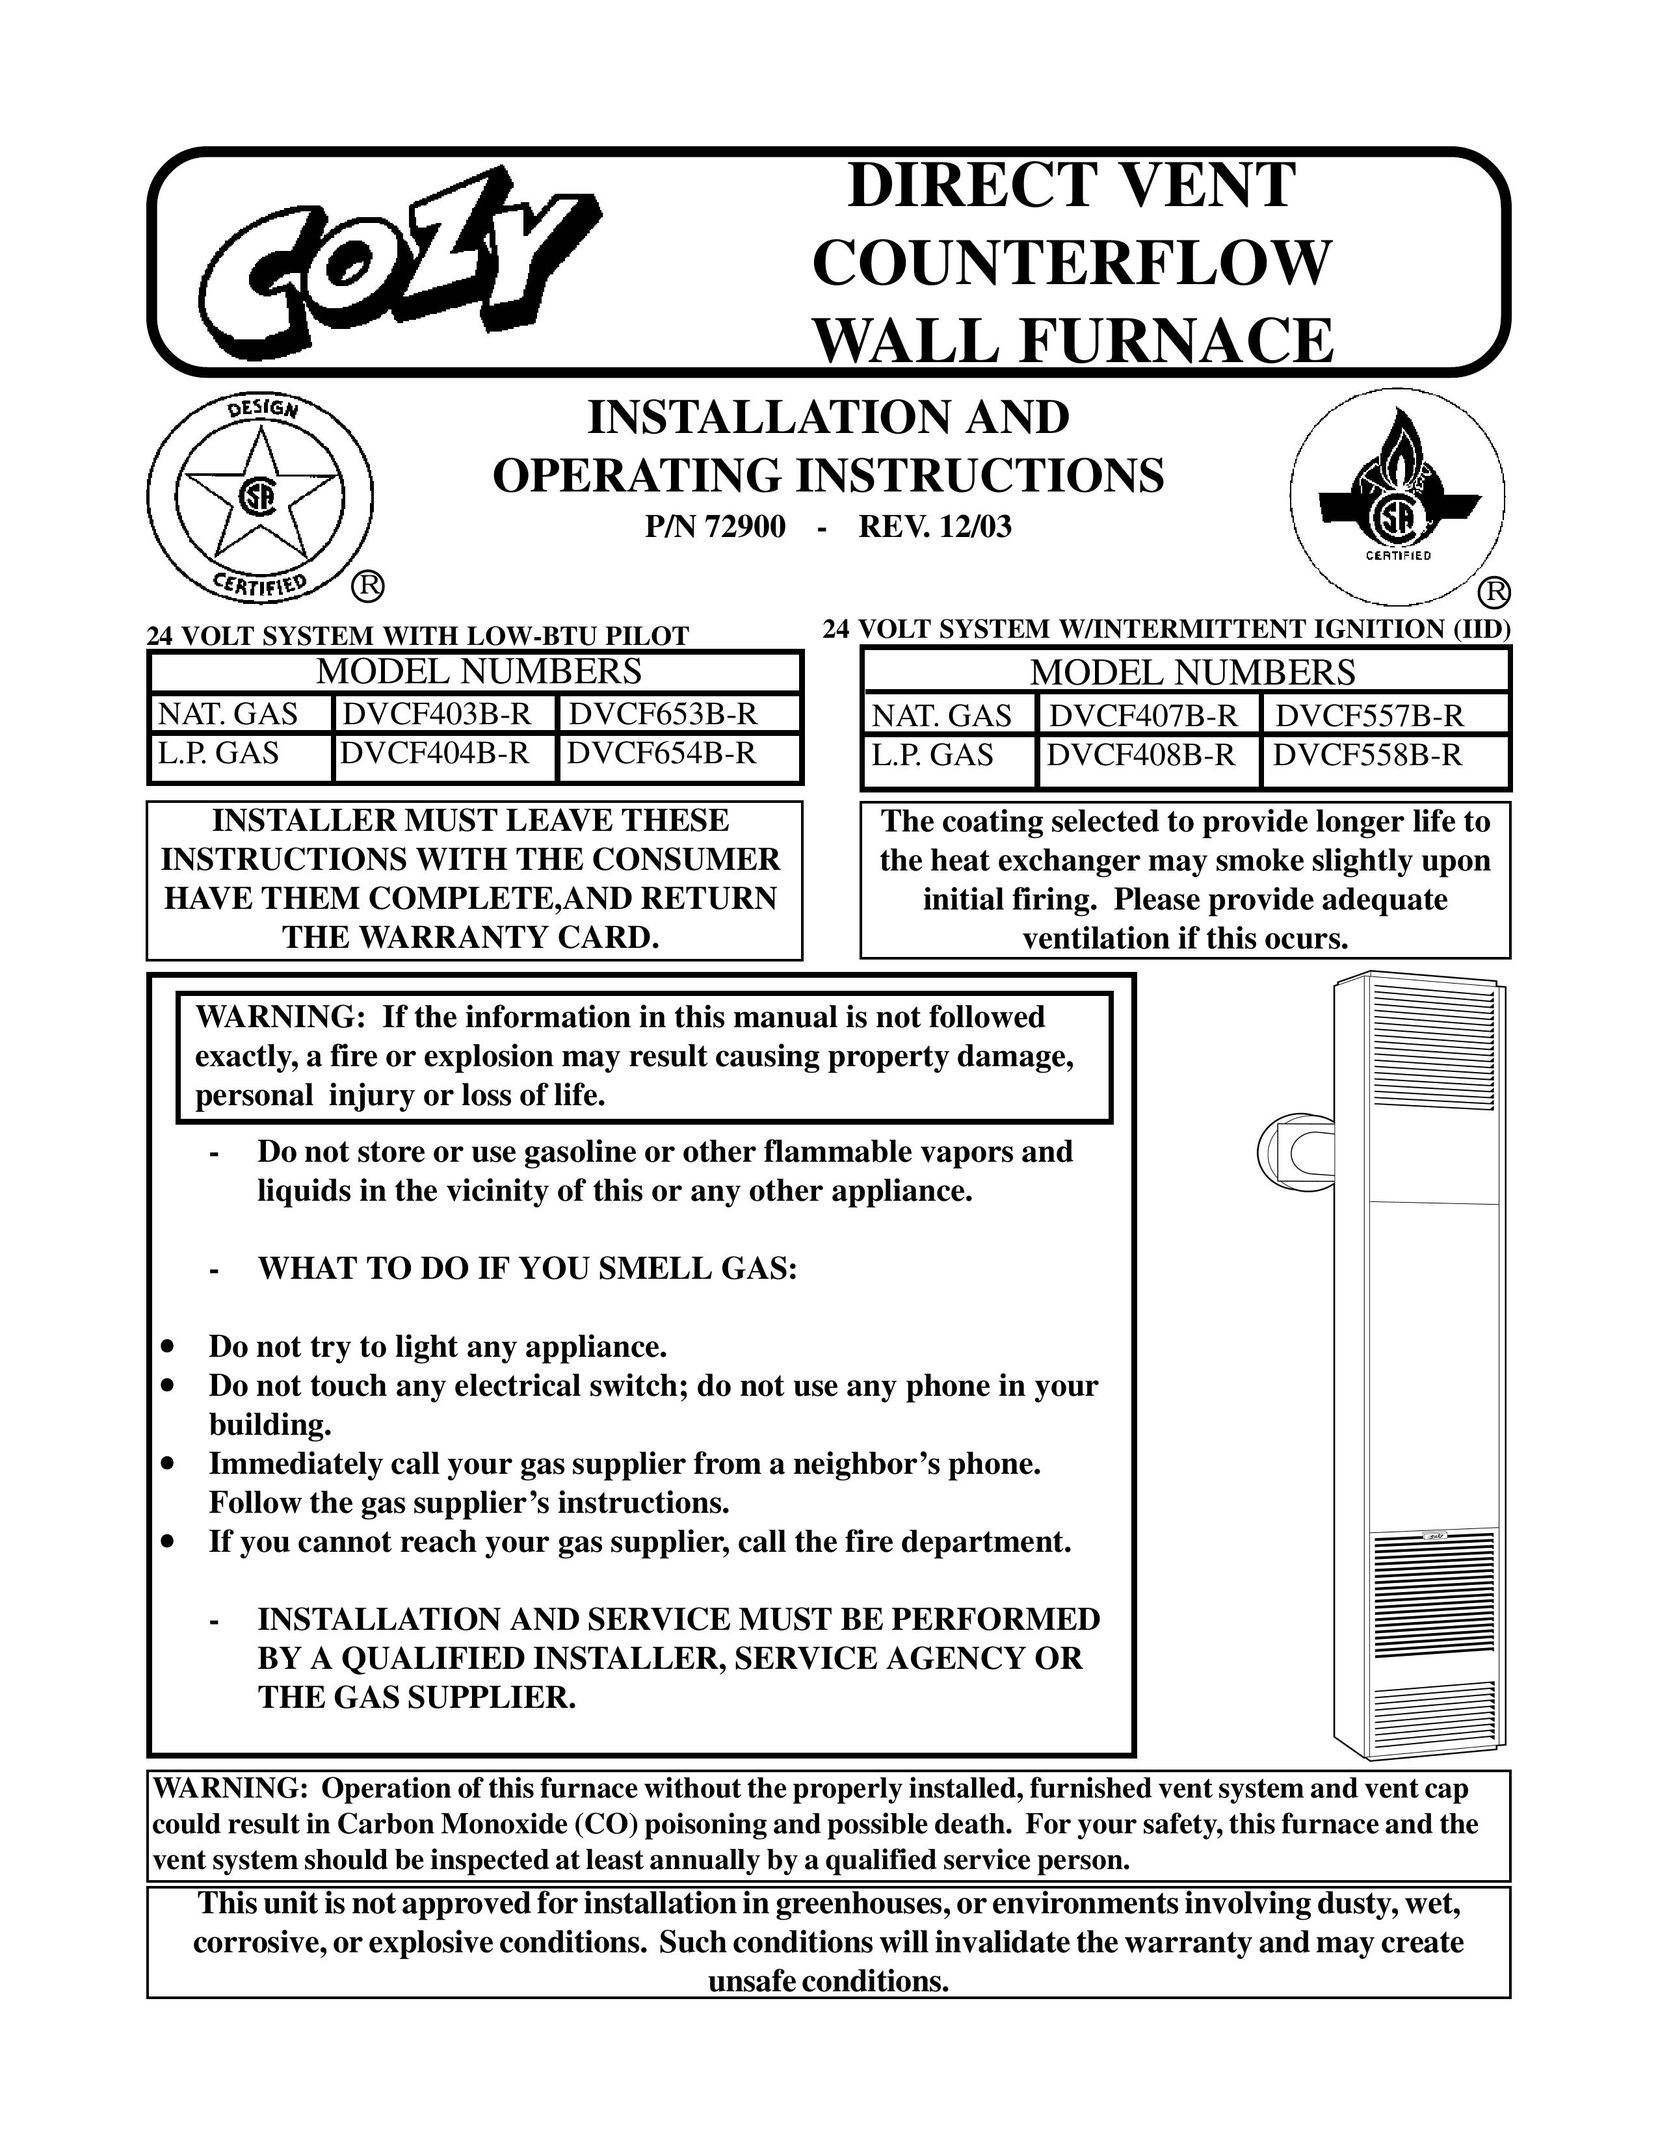 Louisville Tin and Stove DVCF408B-R Furnace User Manual